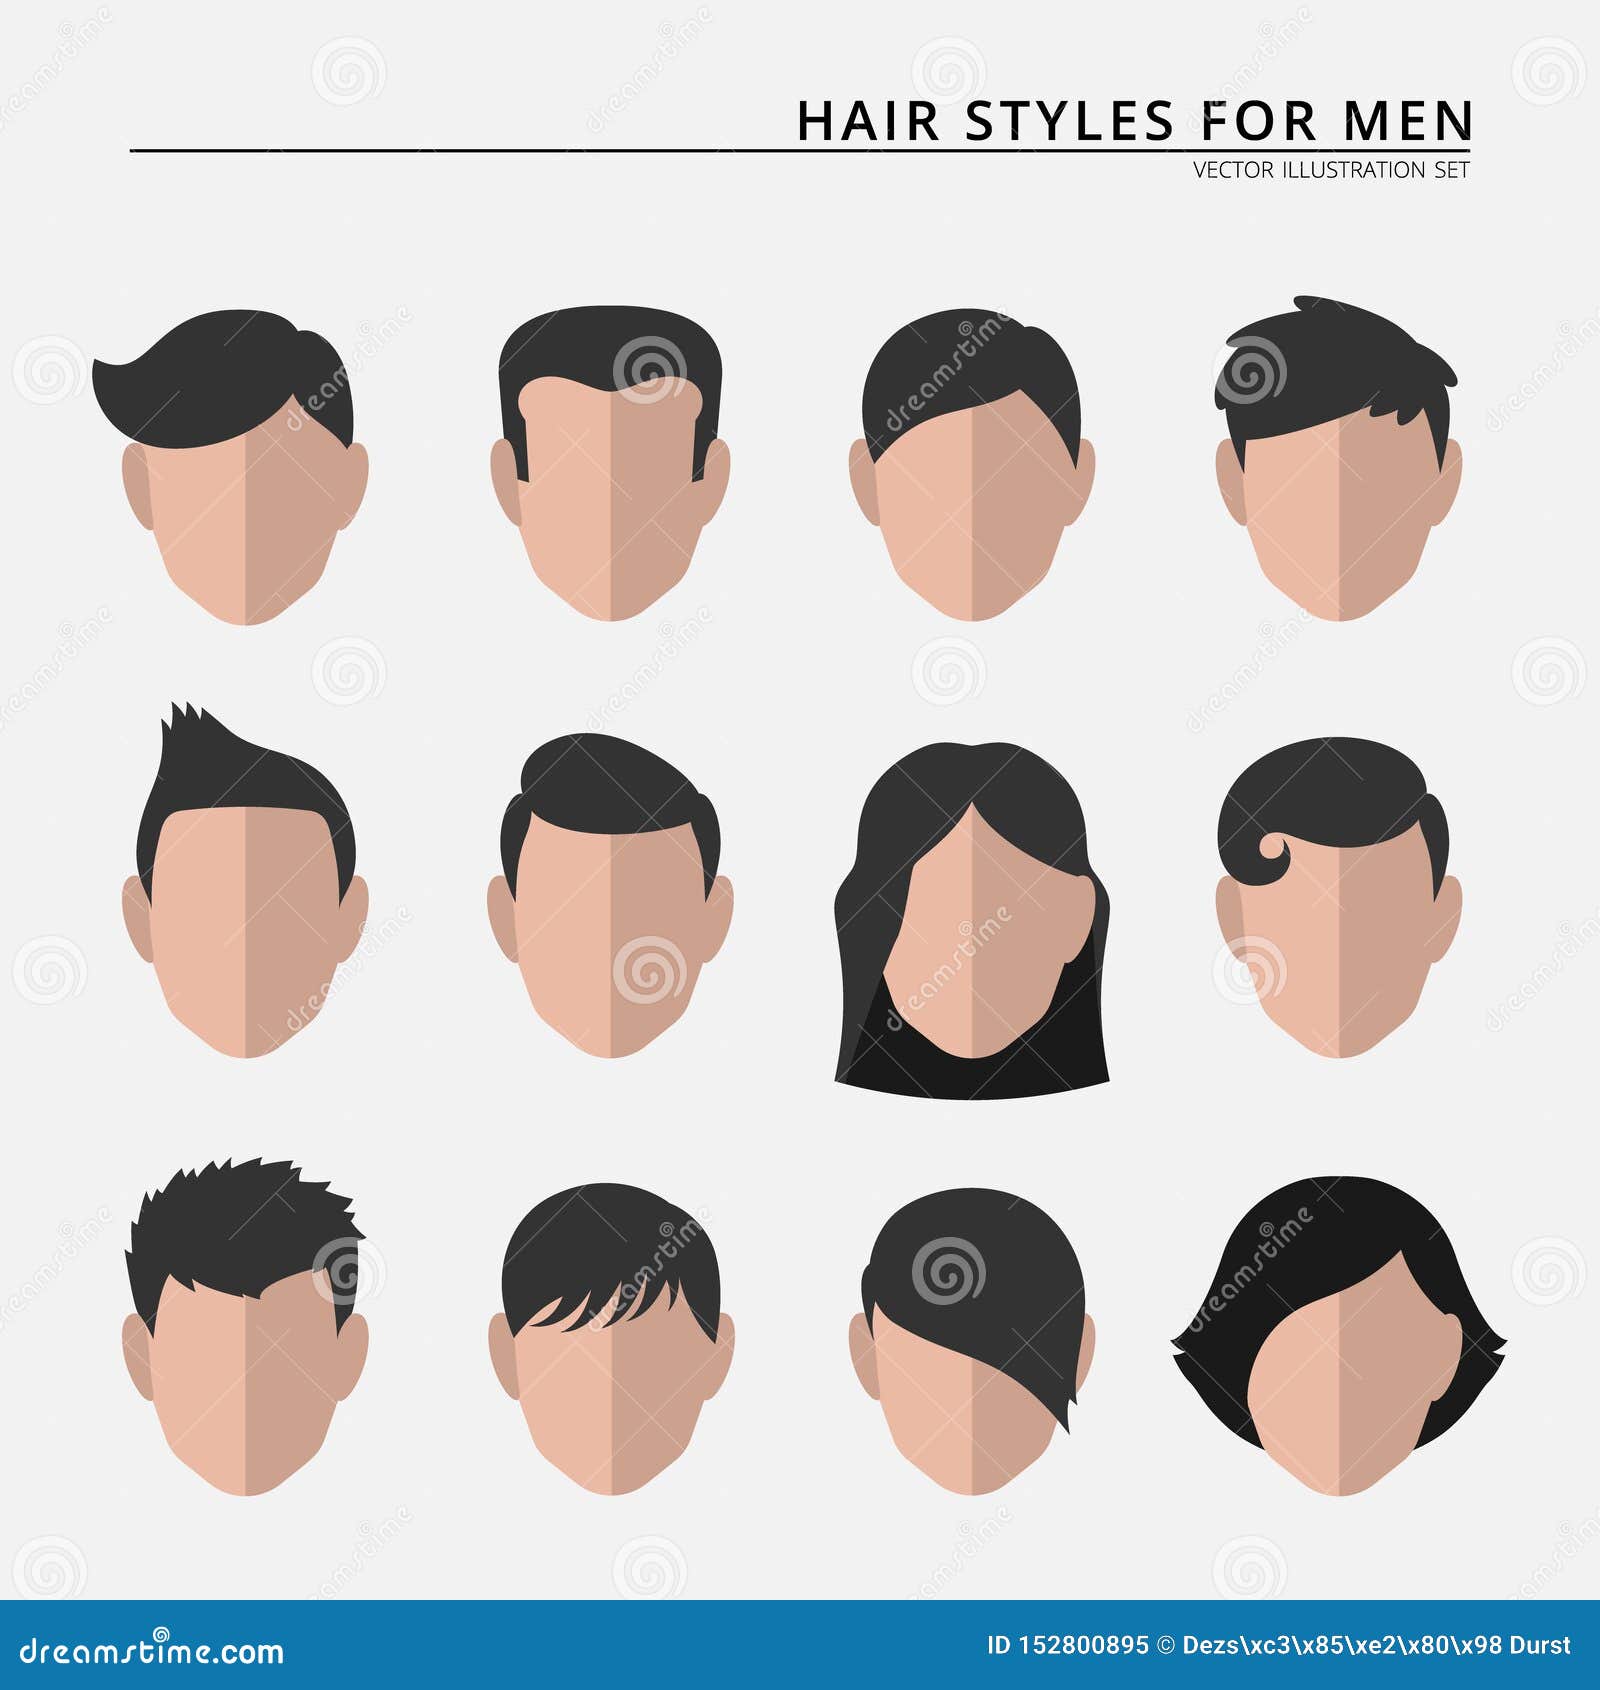 Premium Vector | Woman's various hairstyles. shaggy, bob, bowl cut, pixie,  mullet, garcon, buzz cut.